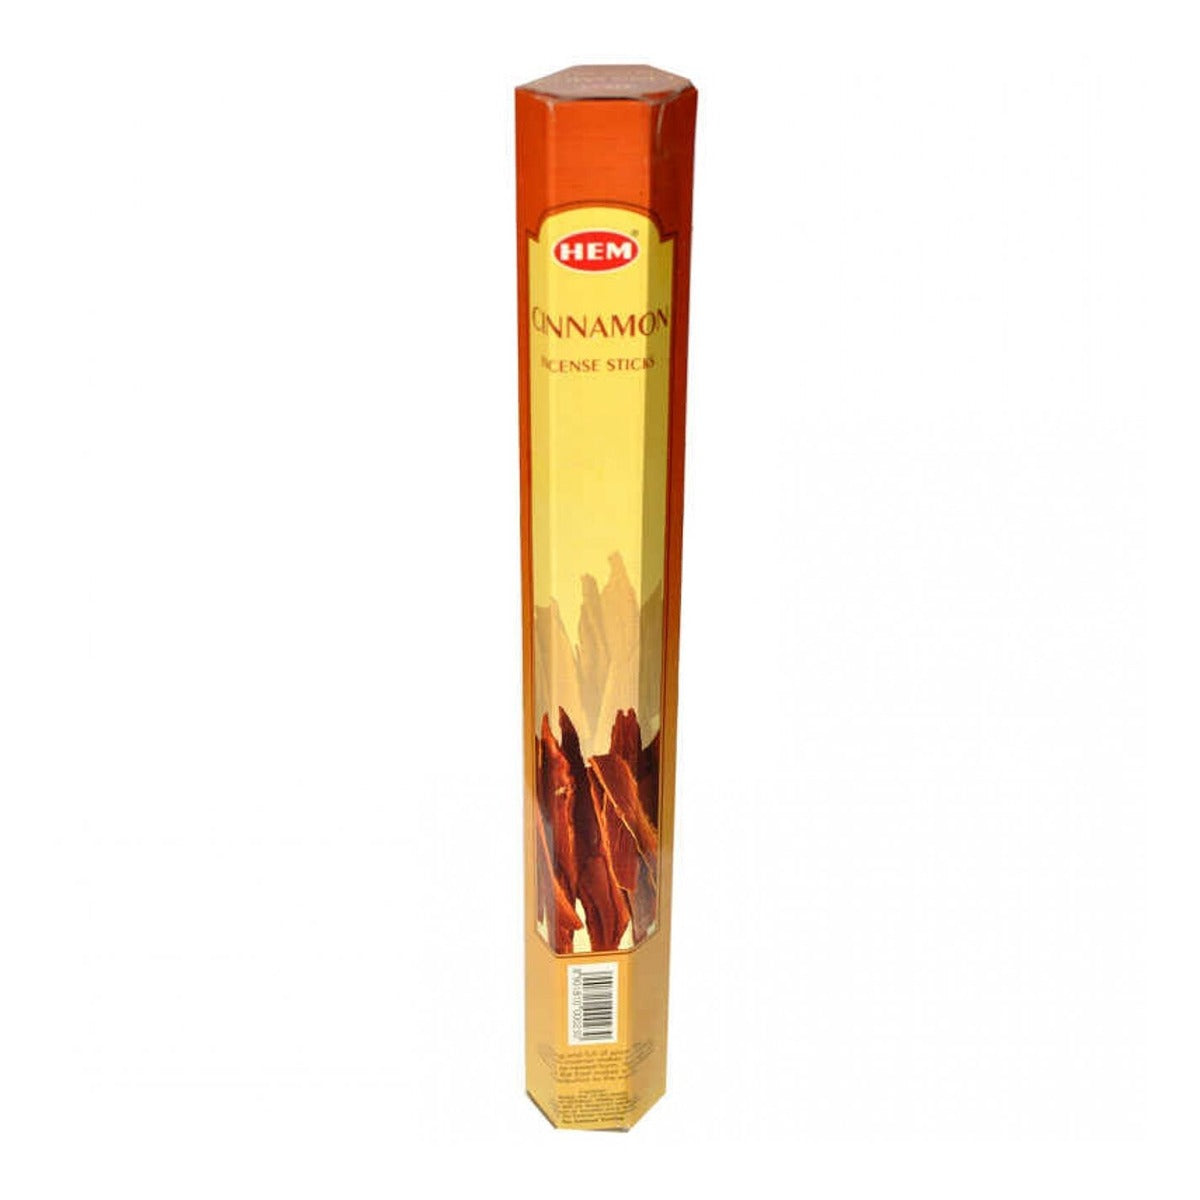 HEM - Cinnamon Incense - 20 Stick - Continental Food Store